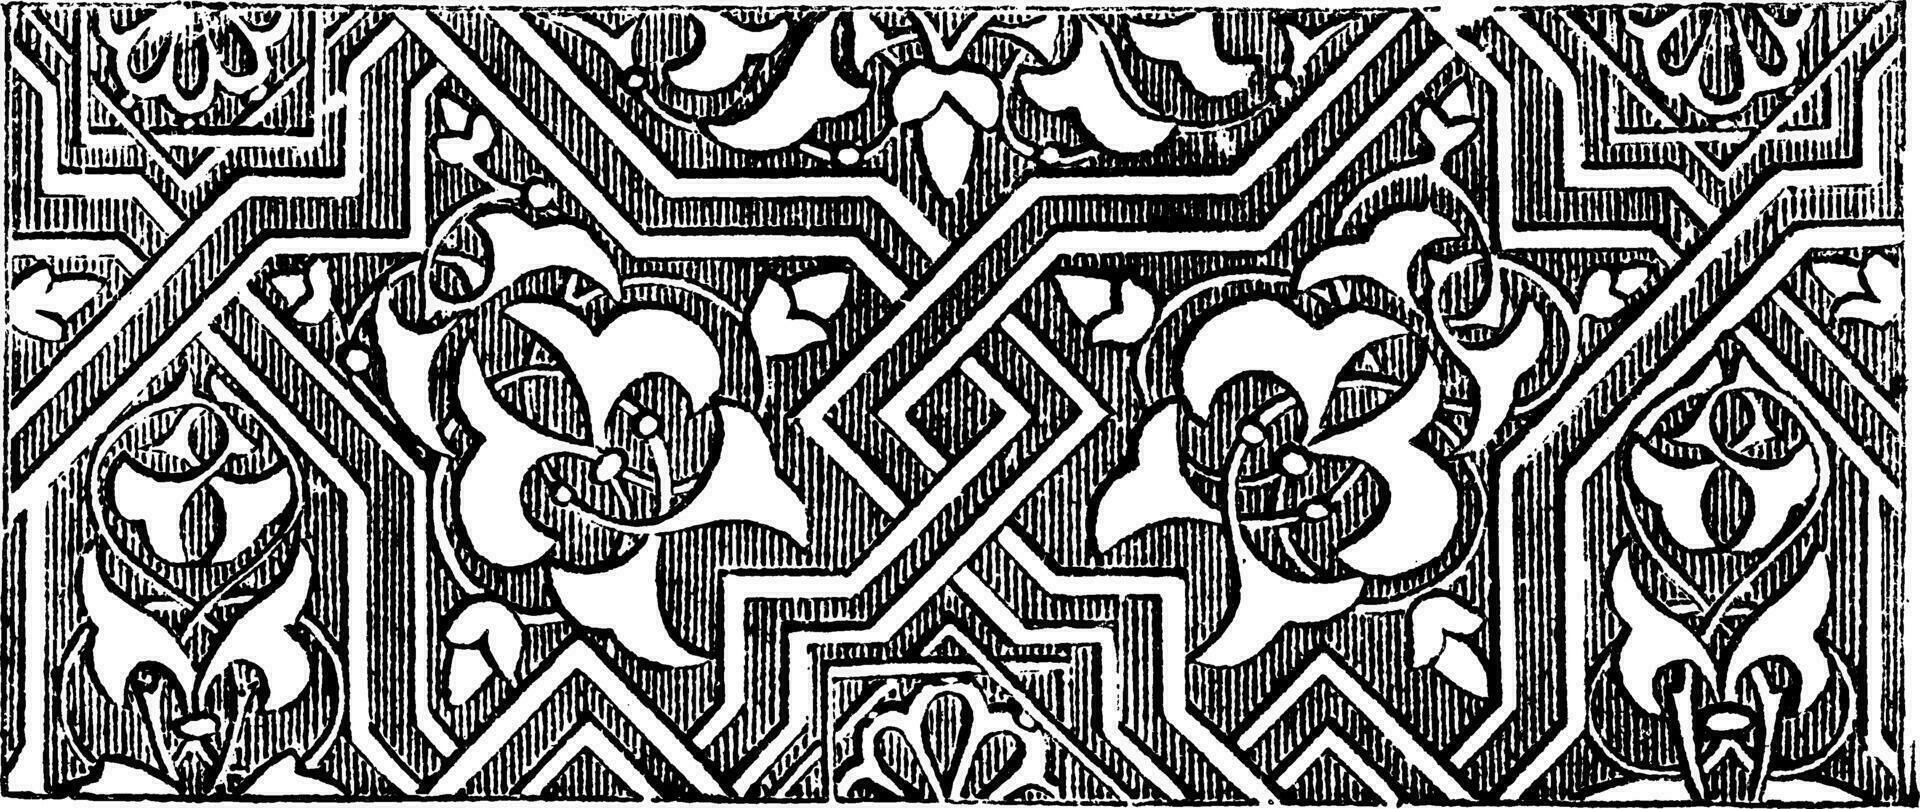 Islamic art or Arabesque pattern artwork. Vintage engraving. vector